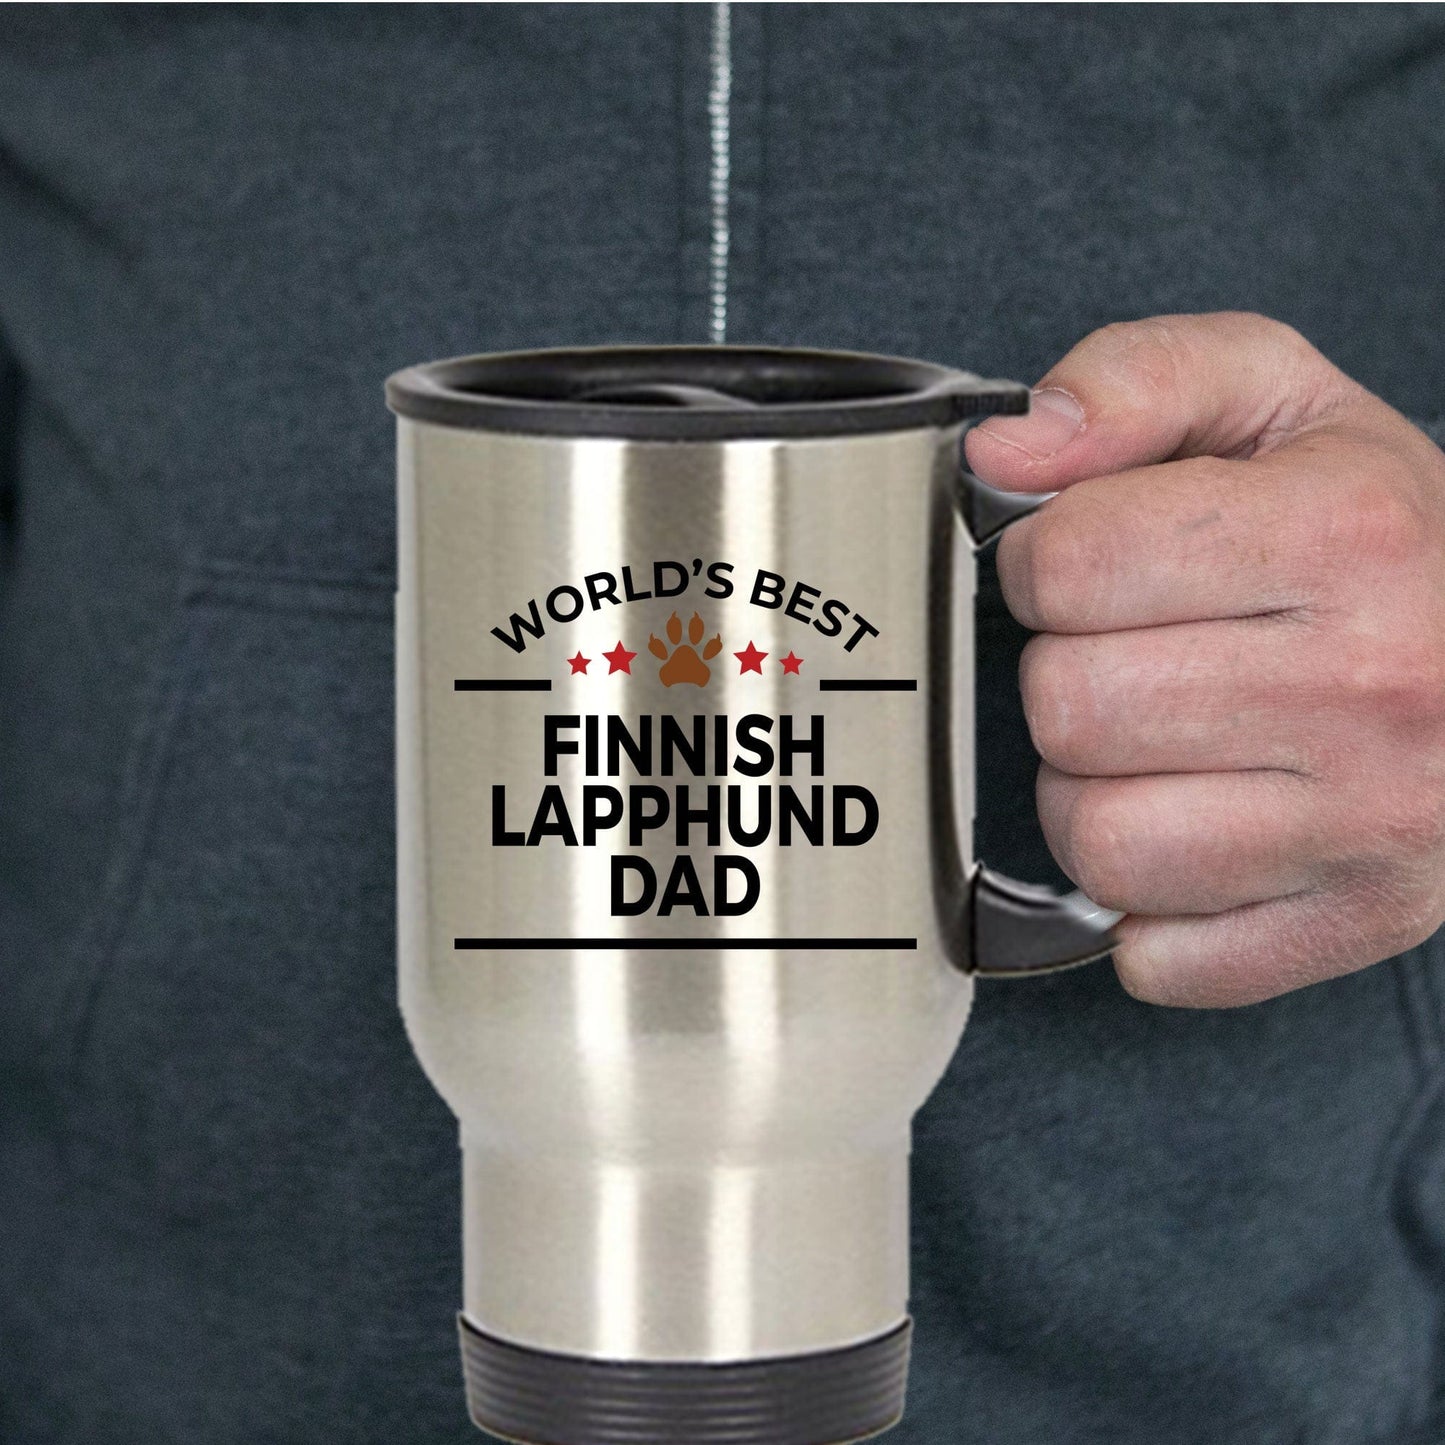 Finnish Lapphund Dog Dad Travel Coffee Mug